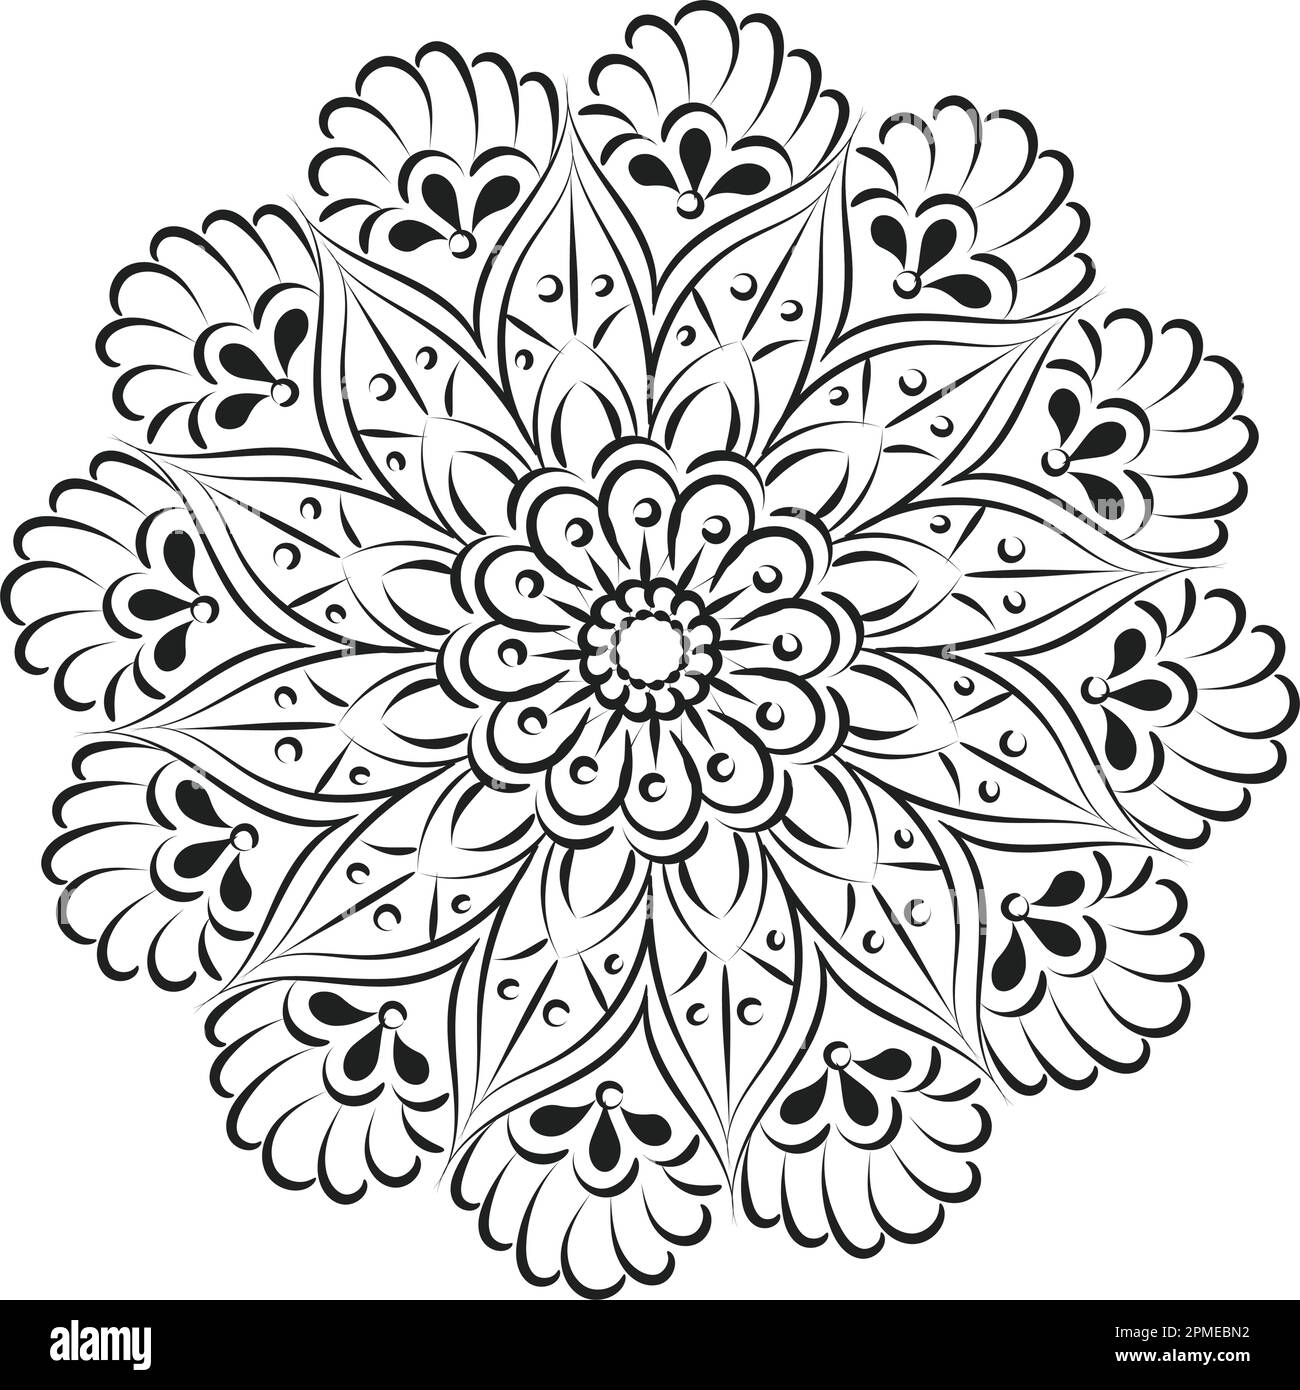 Mandala Art design in circle. Simple mandala design floral mandala